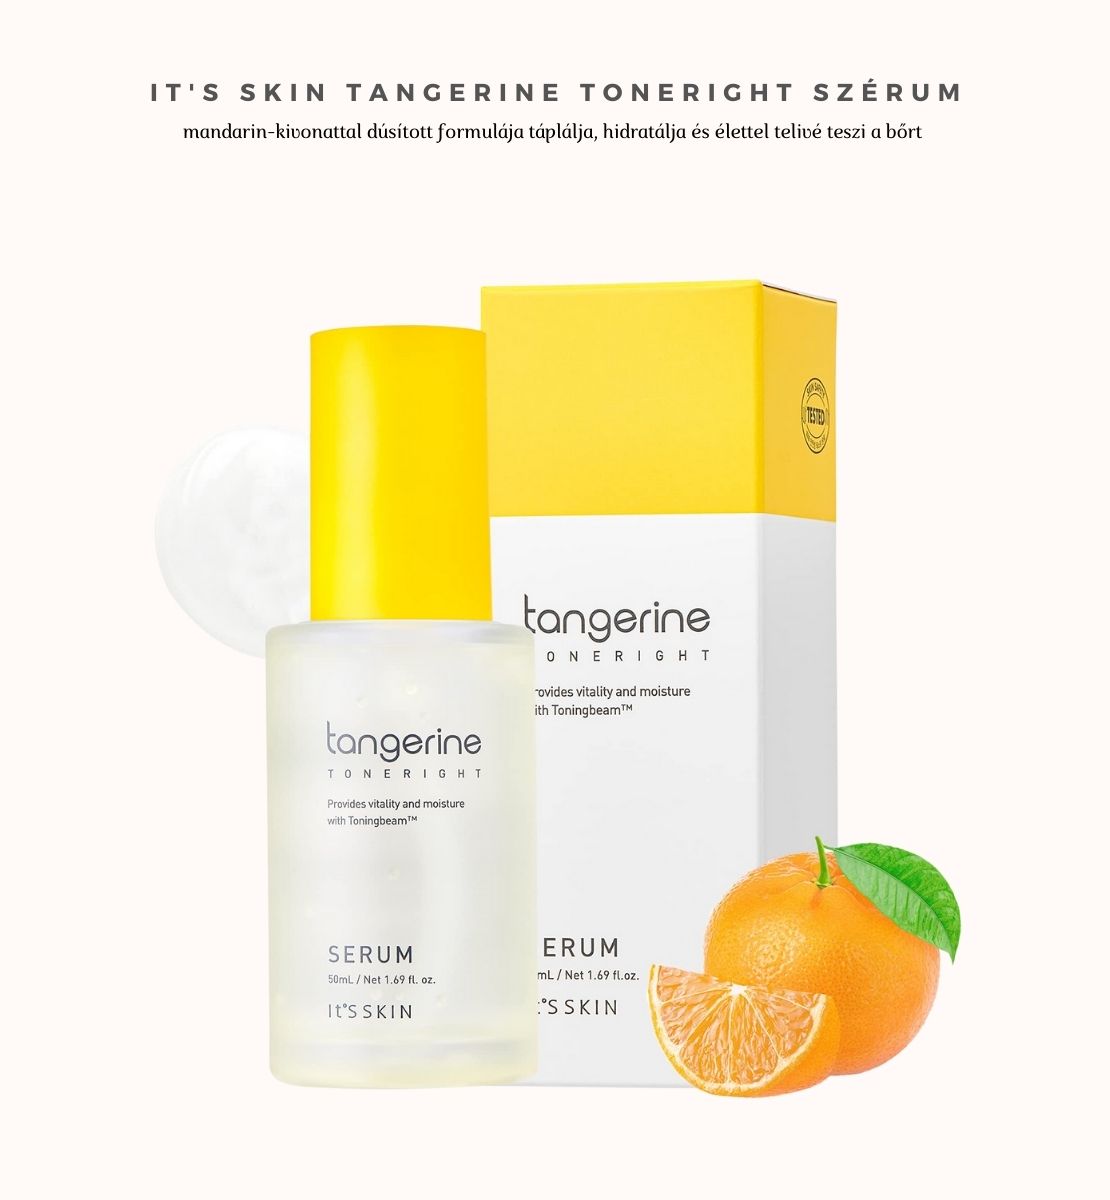 its-skin-tangerine-toneright-szerum-leiras